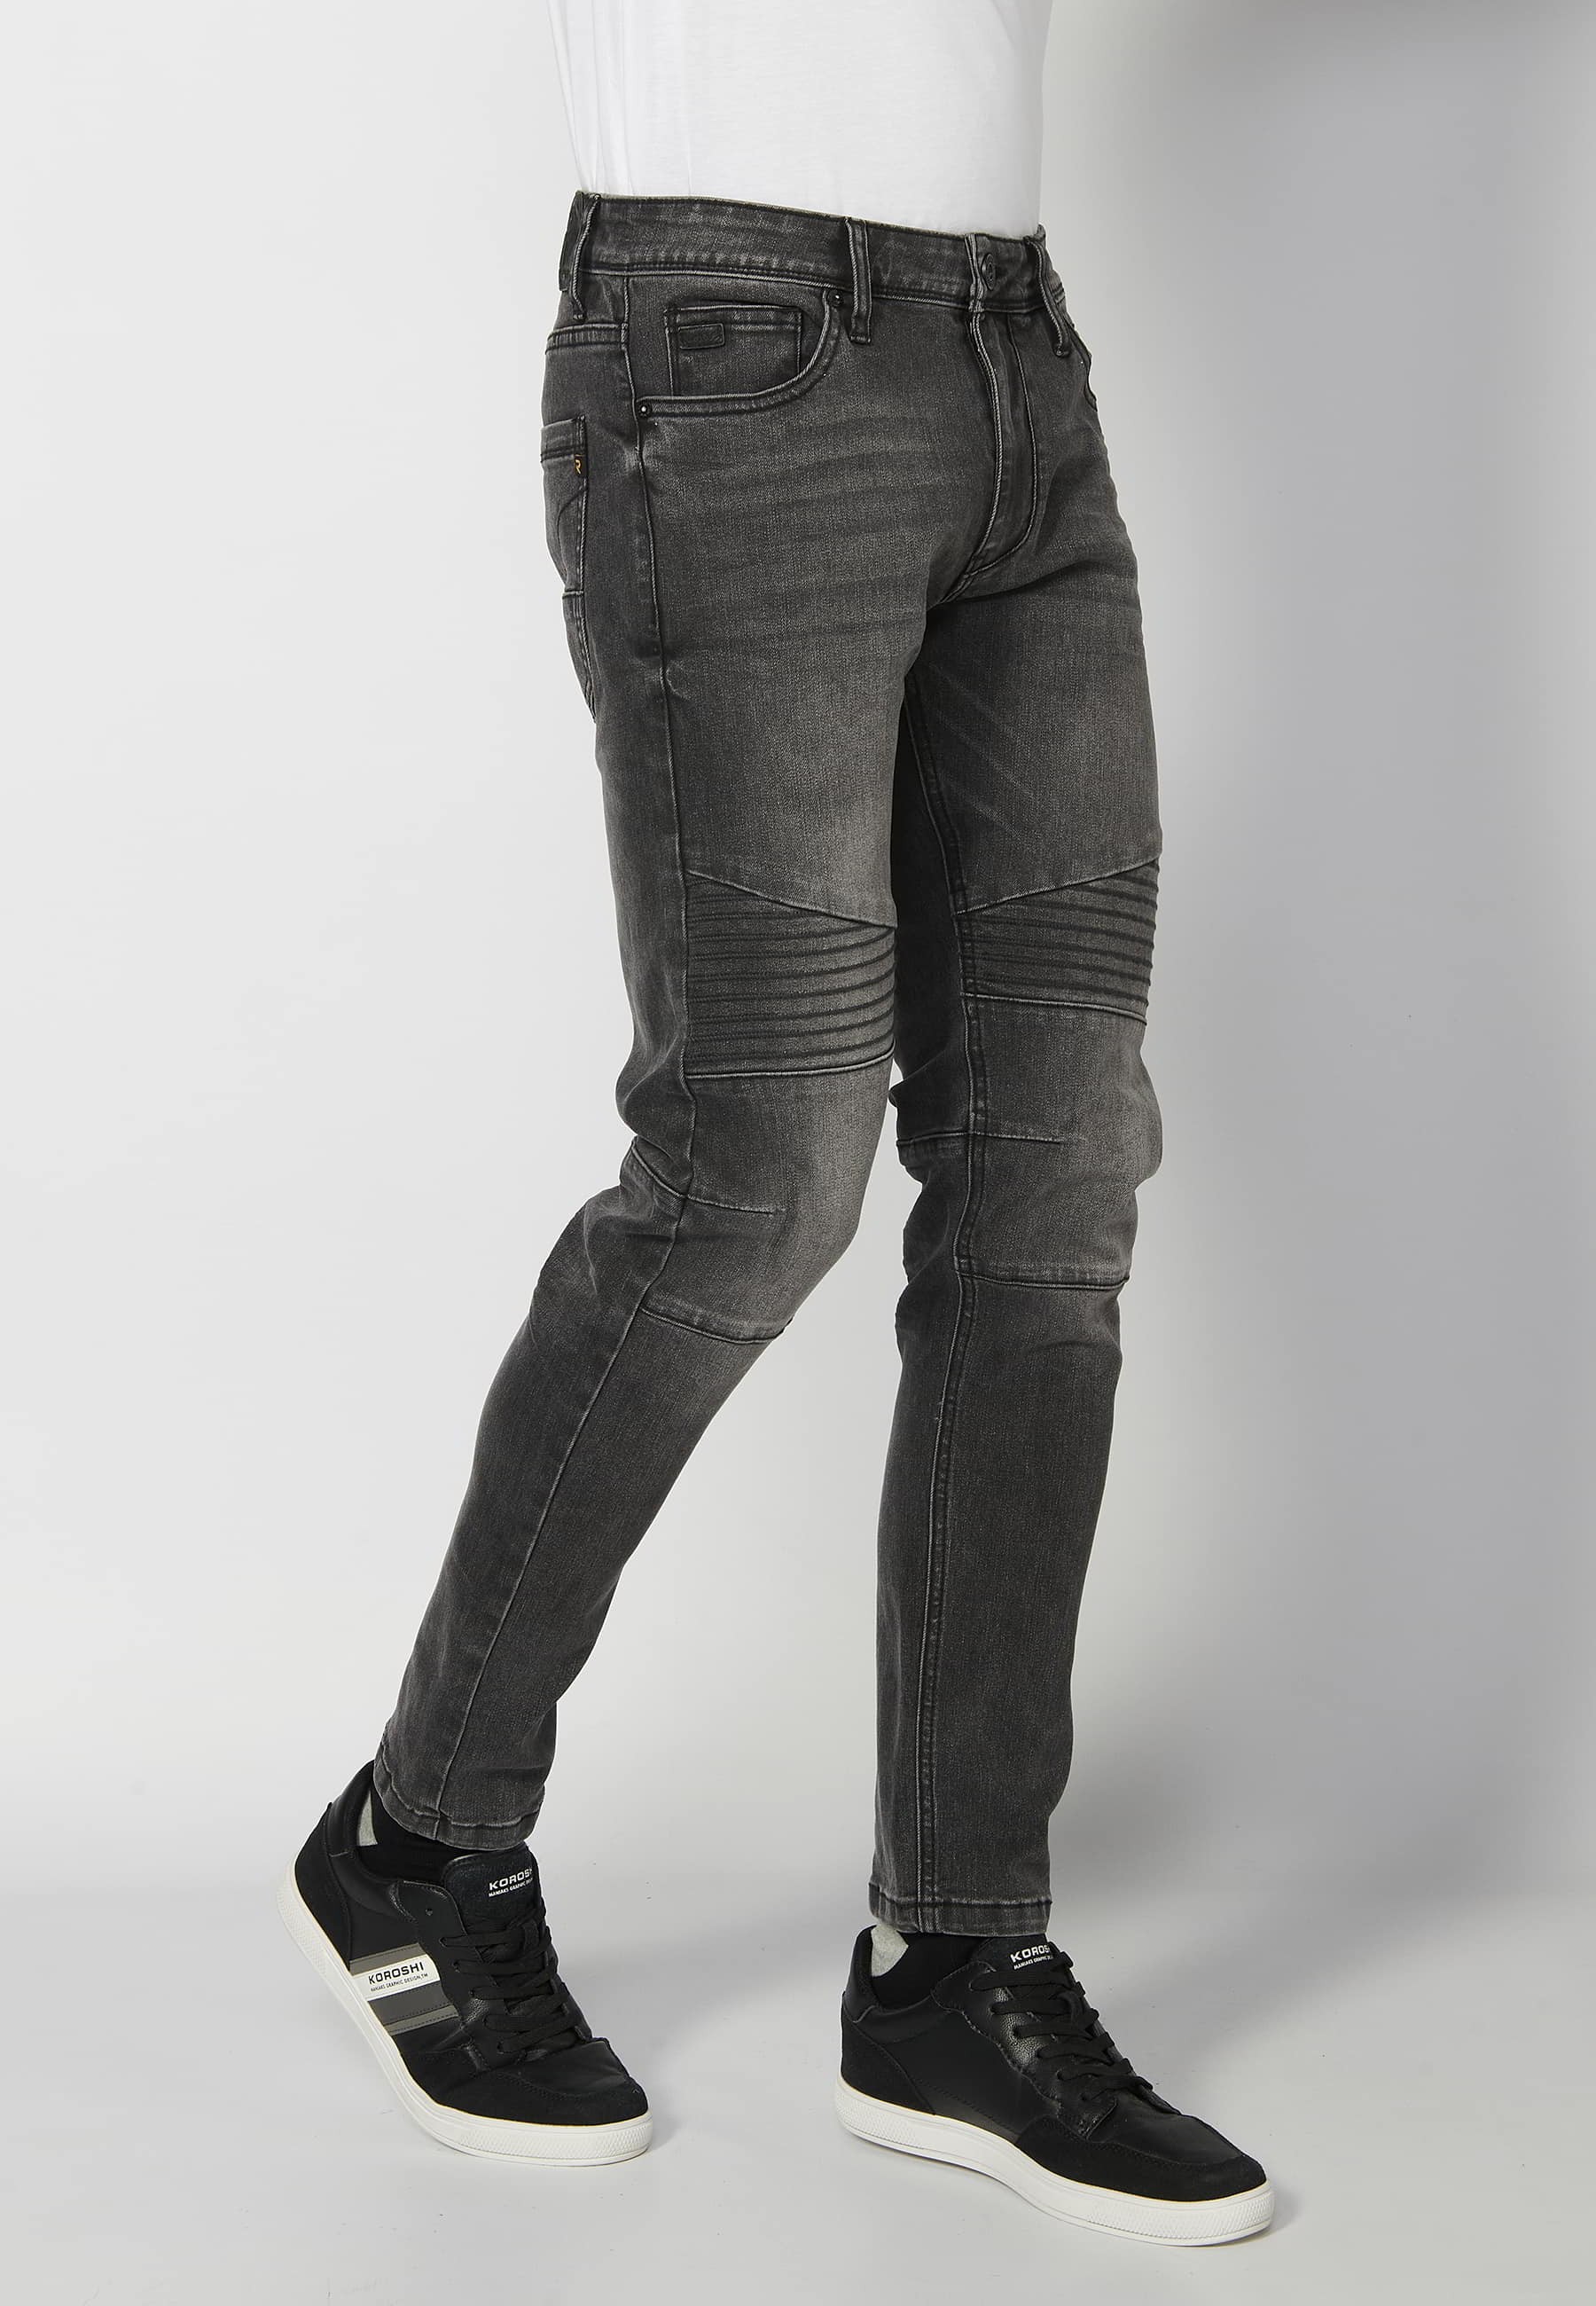 Long skinny fit pants, with five pockets, worn black color for Men 5